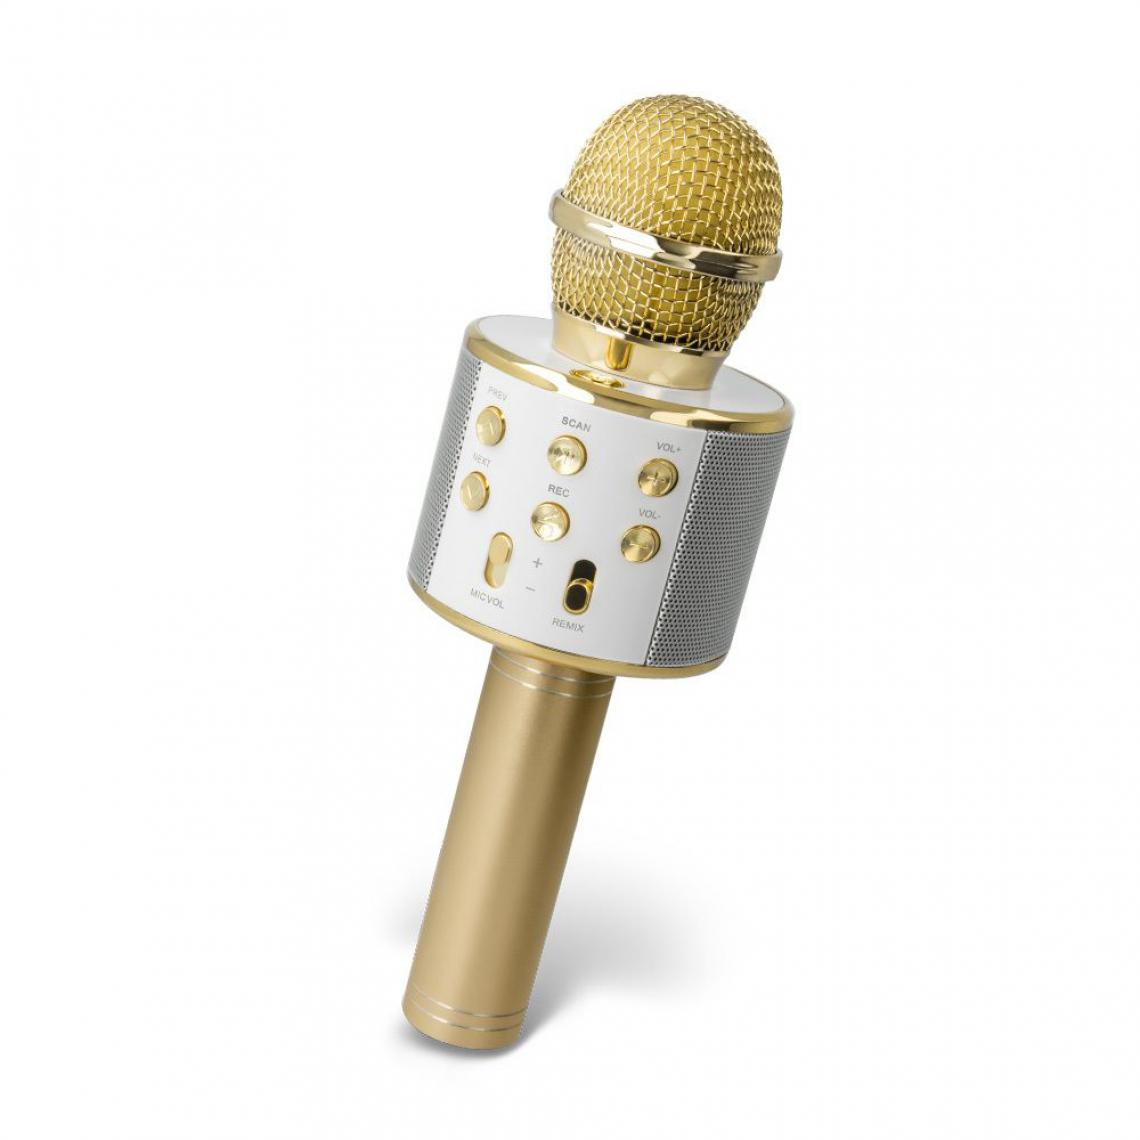 Ozzzo - Microphone Karaoke bluetooth haut parleur ozzzo Gold Or pour Samsung Galaxy Tab S6 - Autres accessoires smartphone